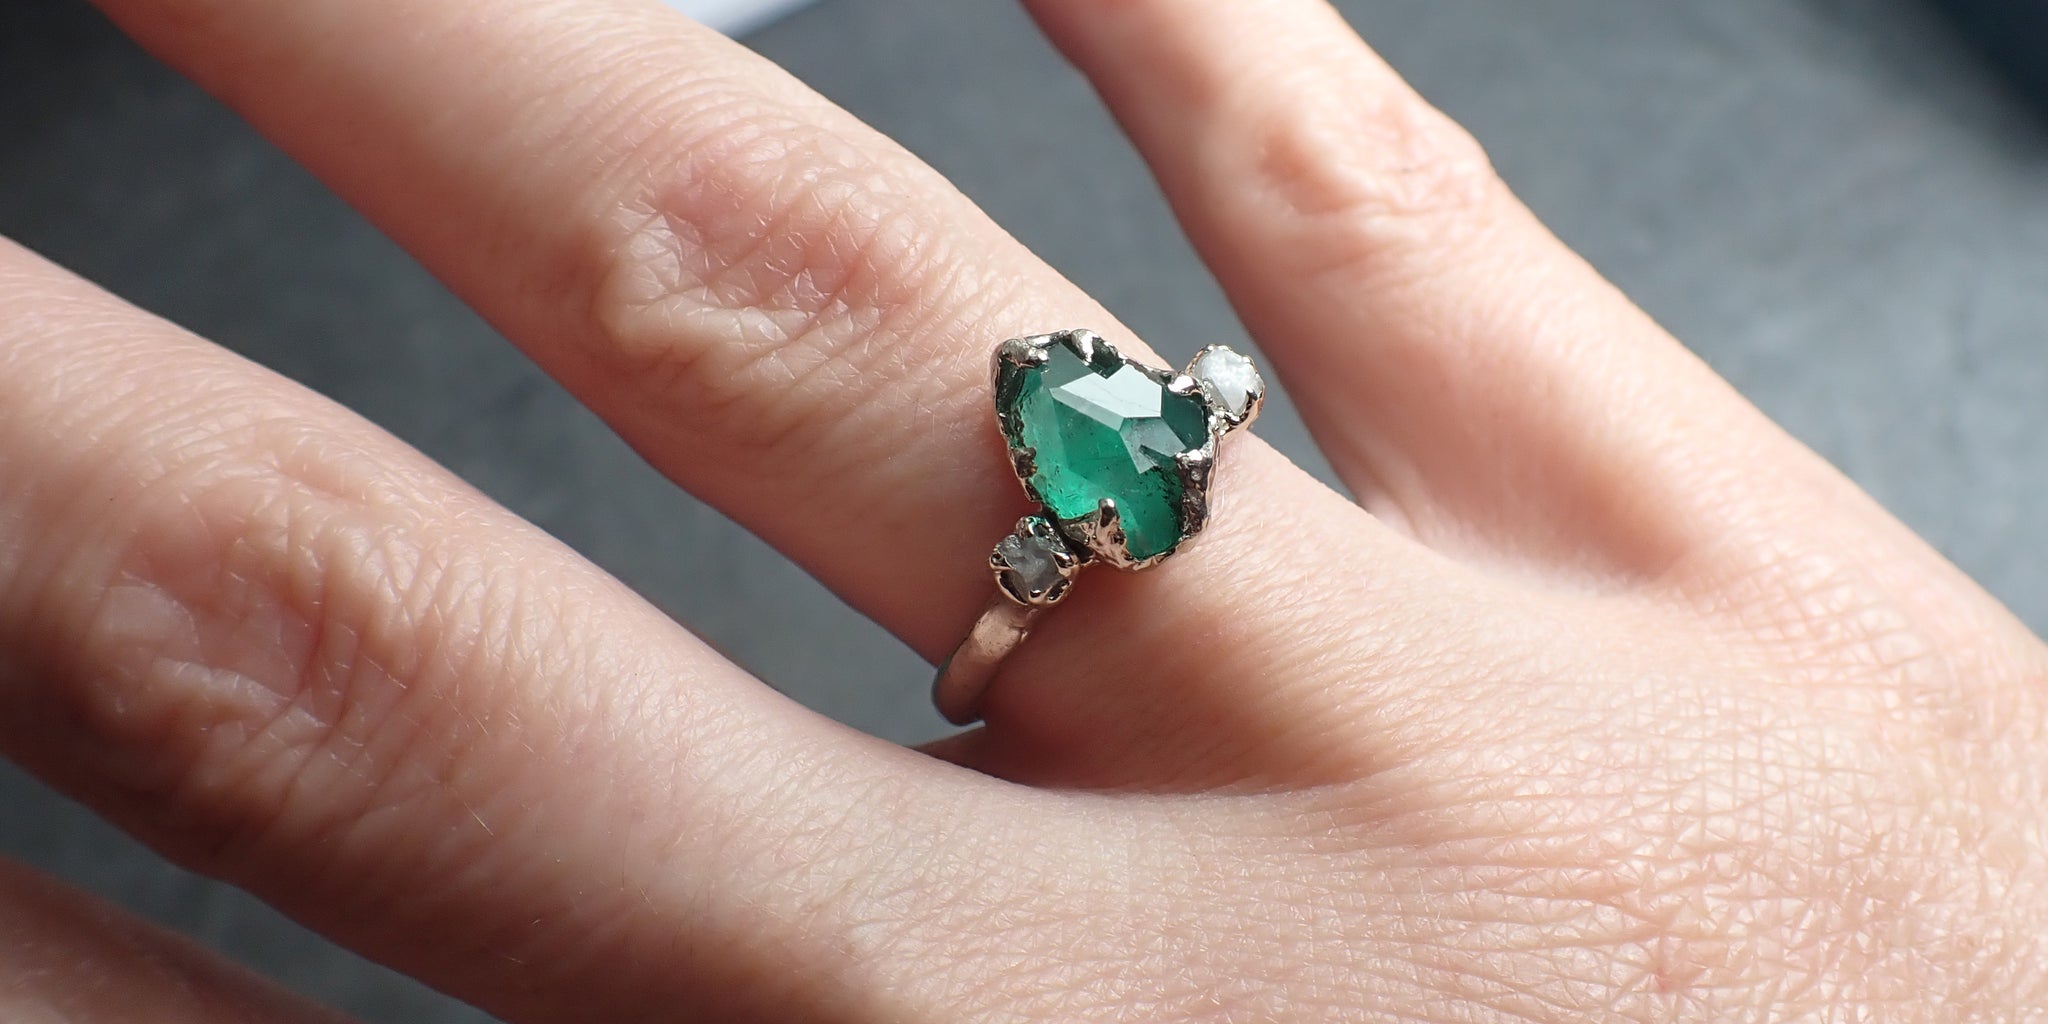 Partially faceted Three Stone Emerald rough diamond Engagement Gemstone Ring 14k white gold Multi stone Wedding Birthstone Ring byAngeline 2304